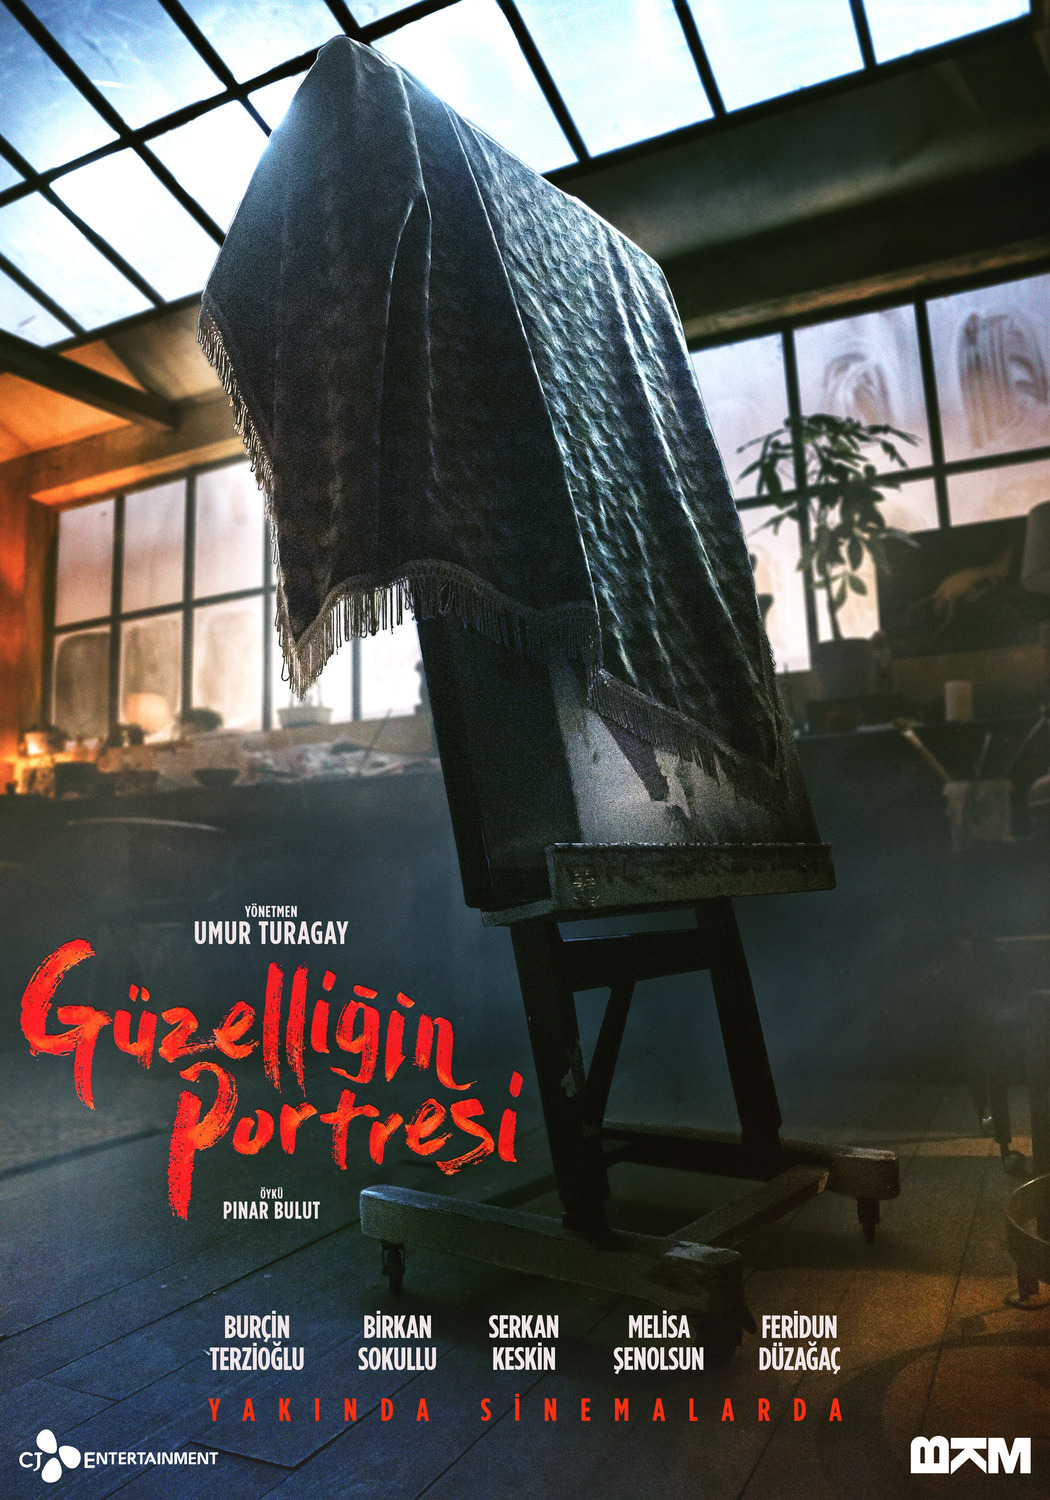 Extra Large Movie Poster Image for Güzelligin Portresi (#1 of 8)